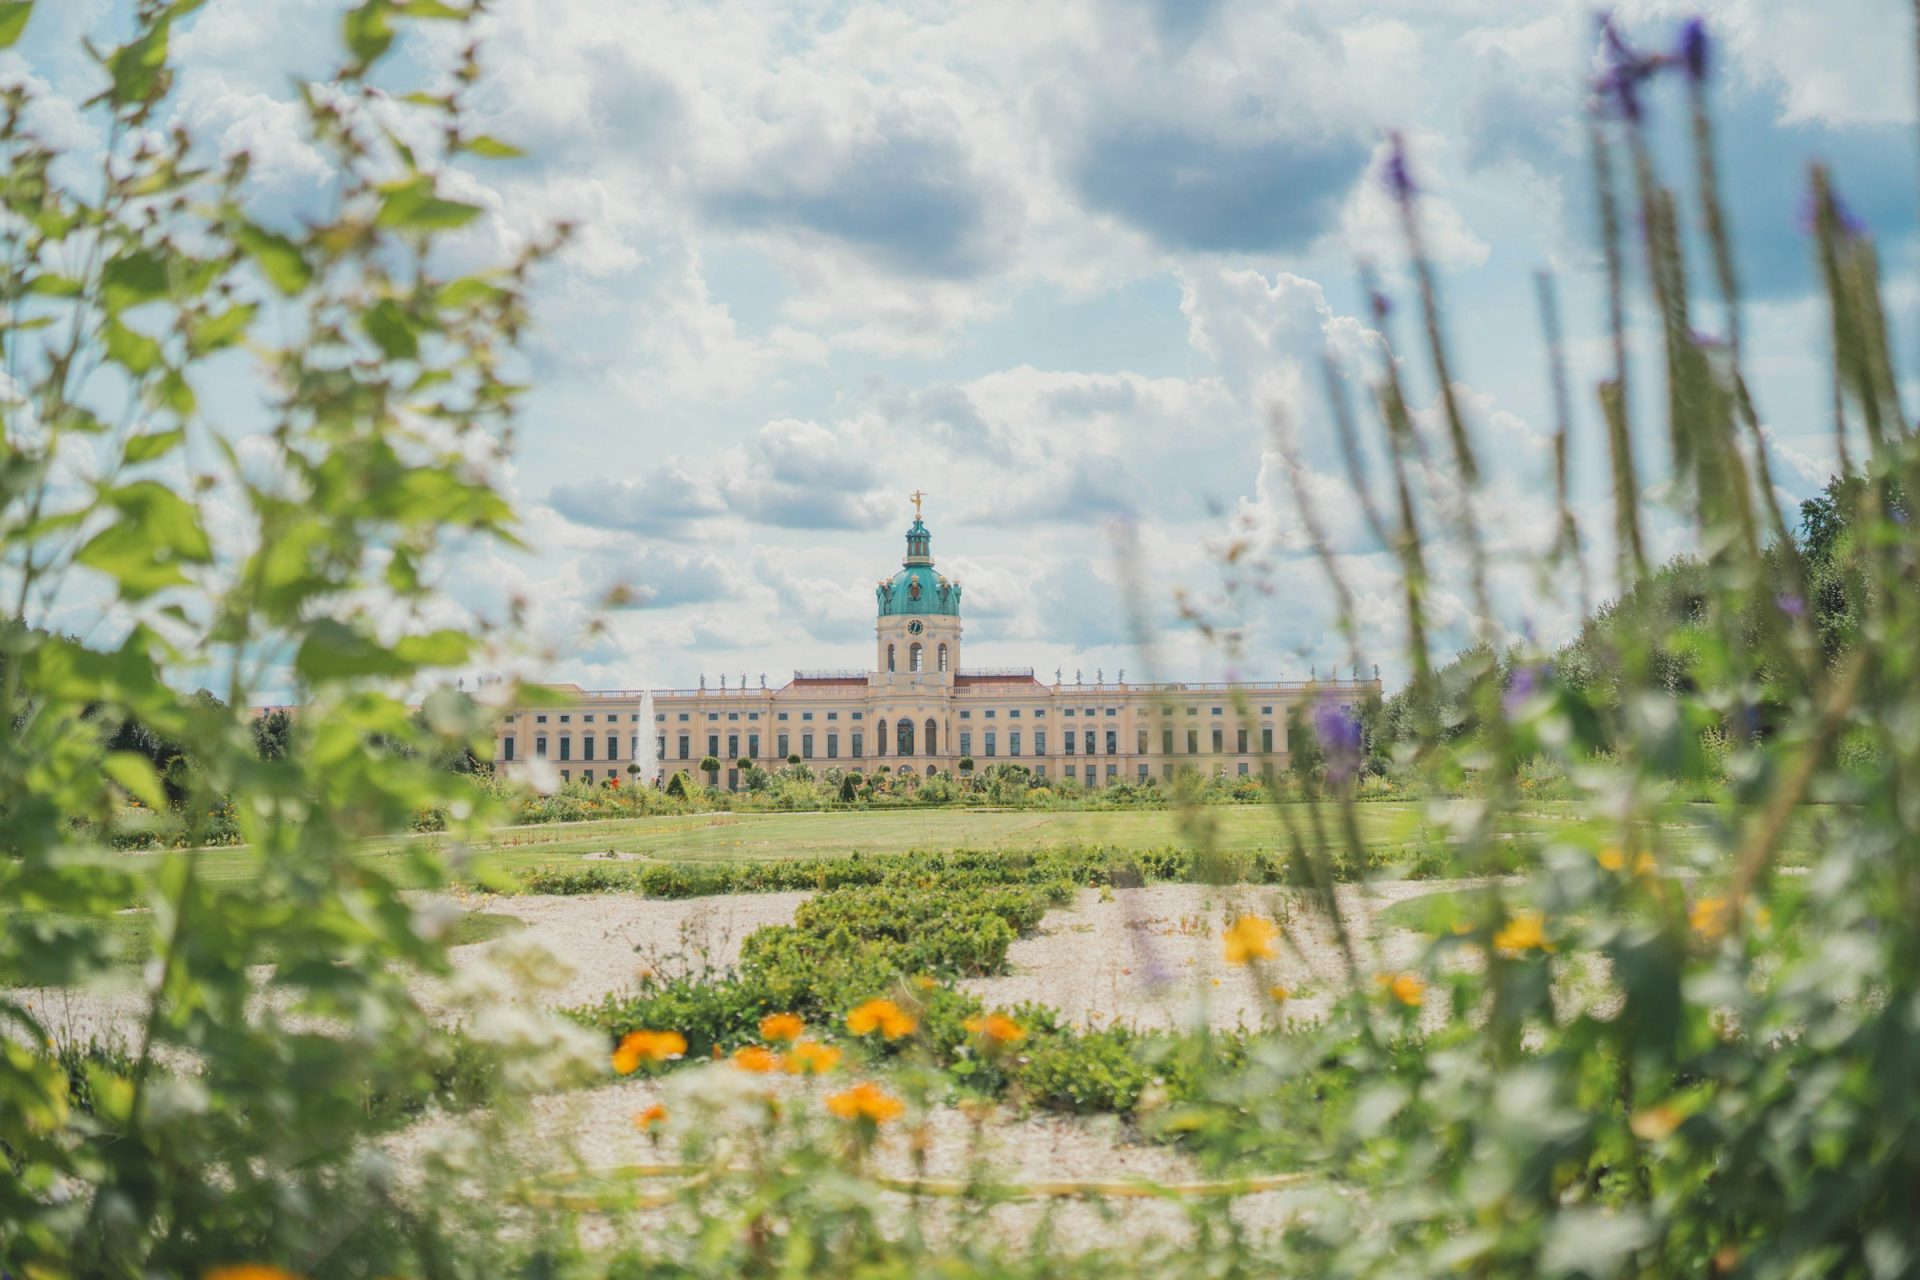 Charlottenburg Palace in Berlin, Germany.